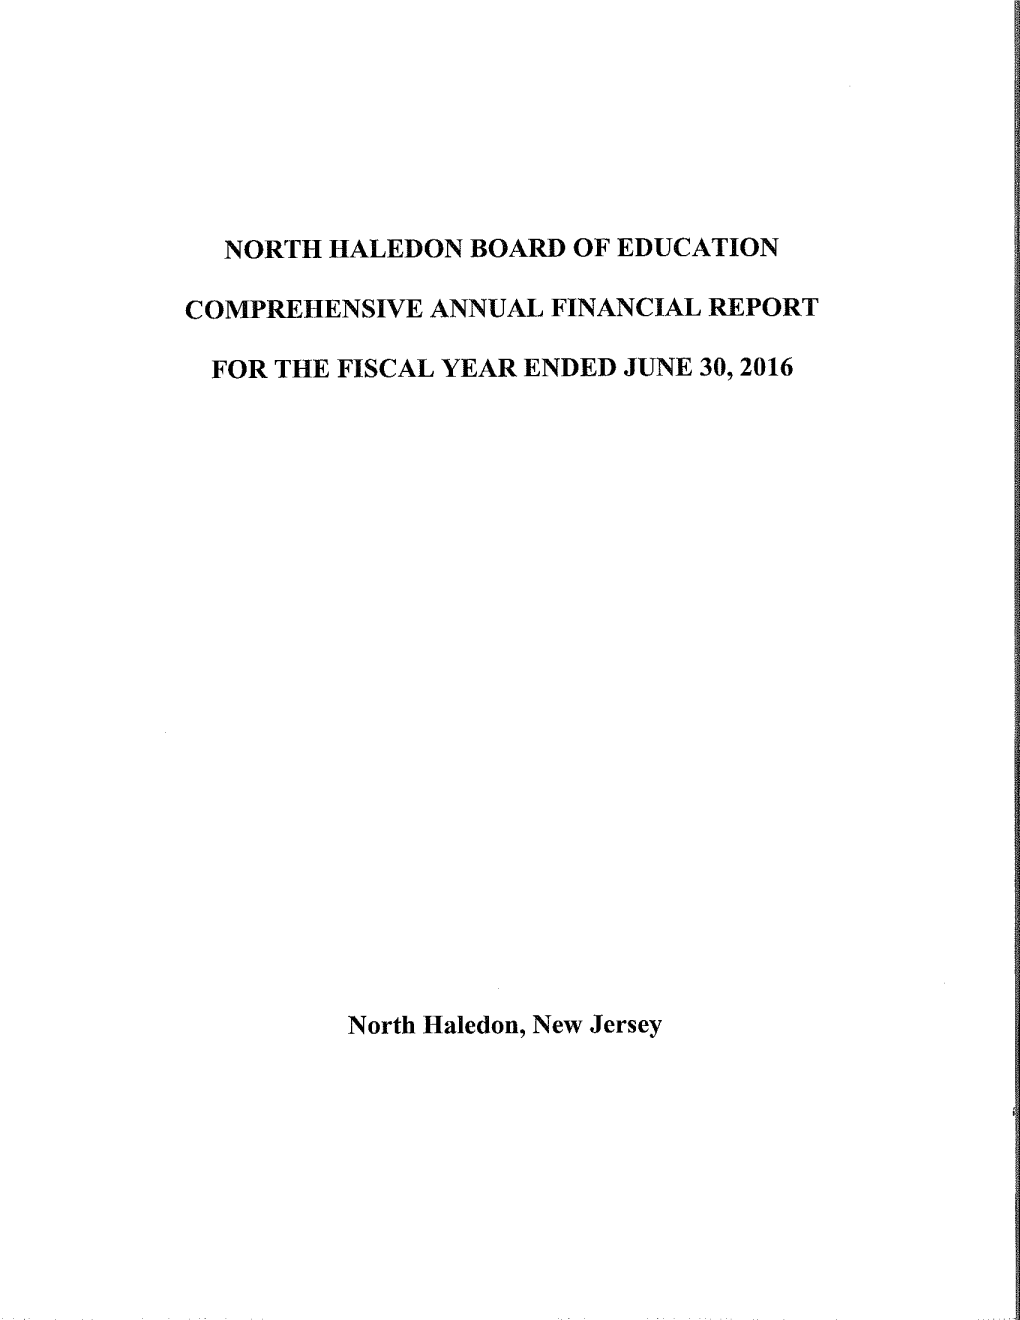 North Haledon Board of Education Comprehensive